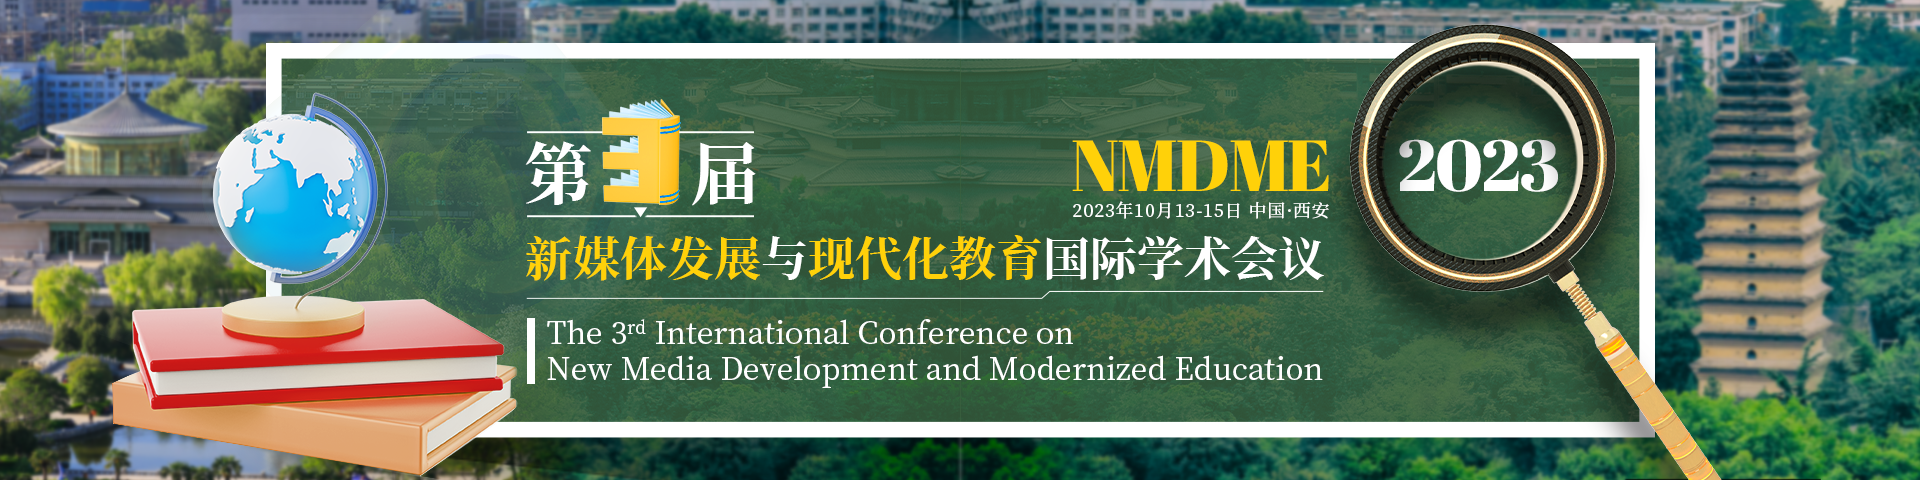 【EI/SCOPUS检索】第三届新媒体发展与现代化教育国际学术会议（NMDME 2023）